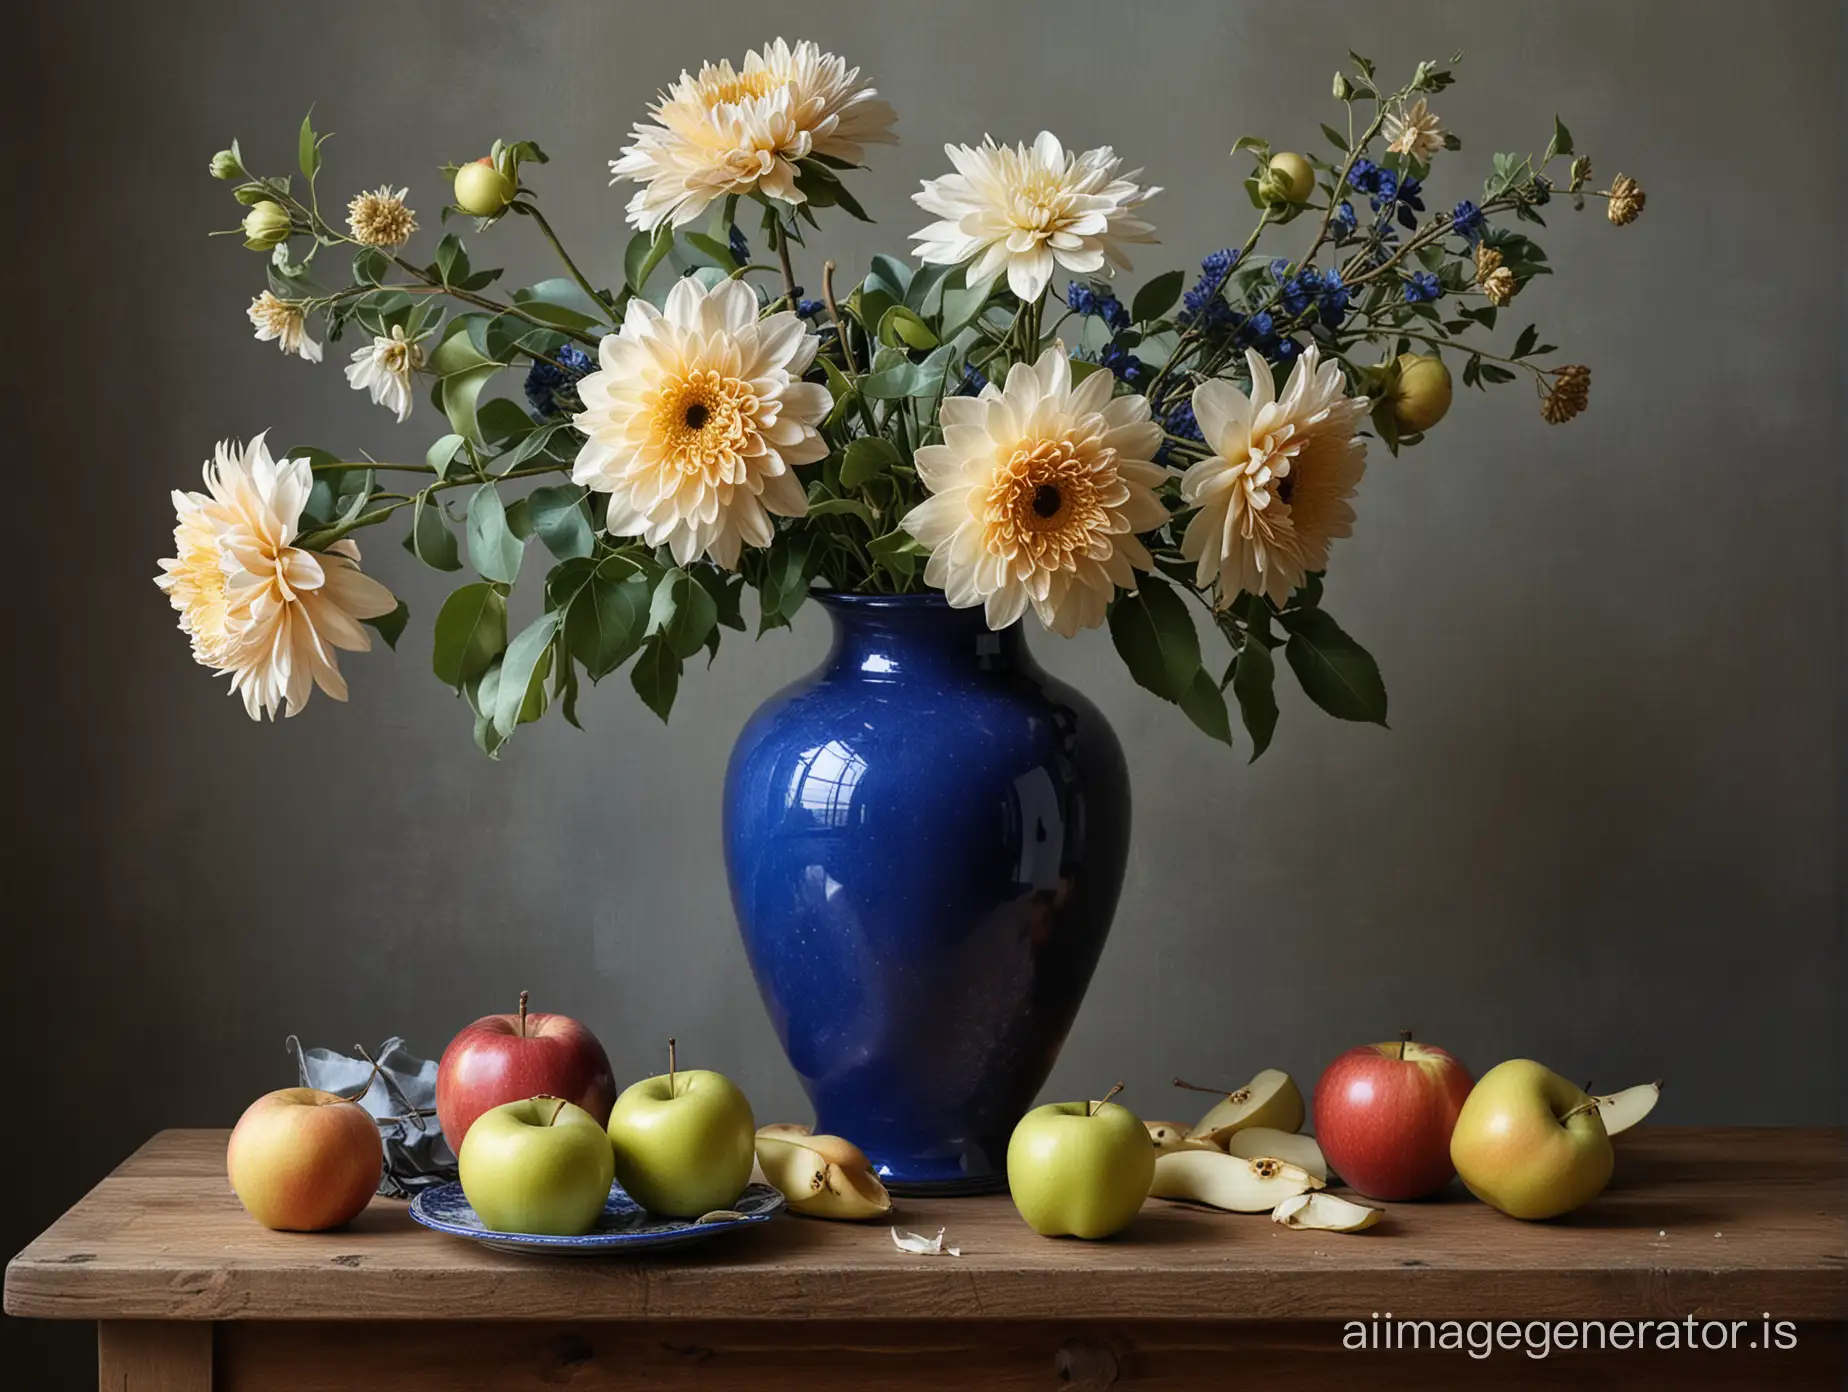 Floral-Arrangement-with-Cobalt-Vase-Surrounded-by-Fresh-Fruits